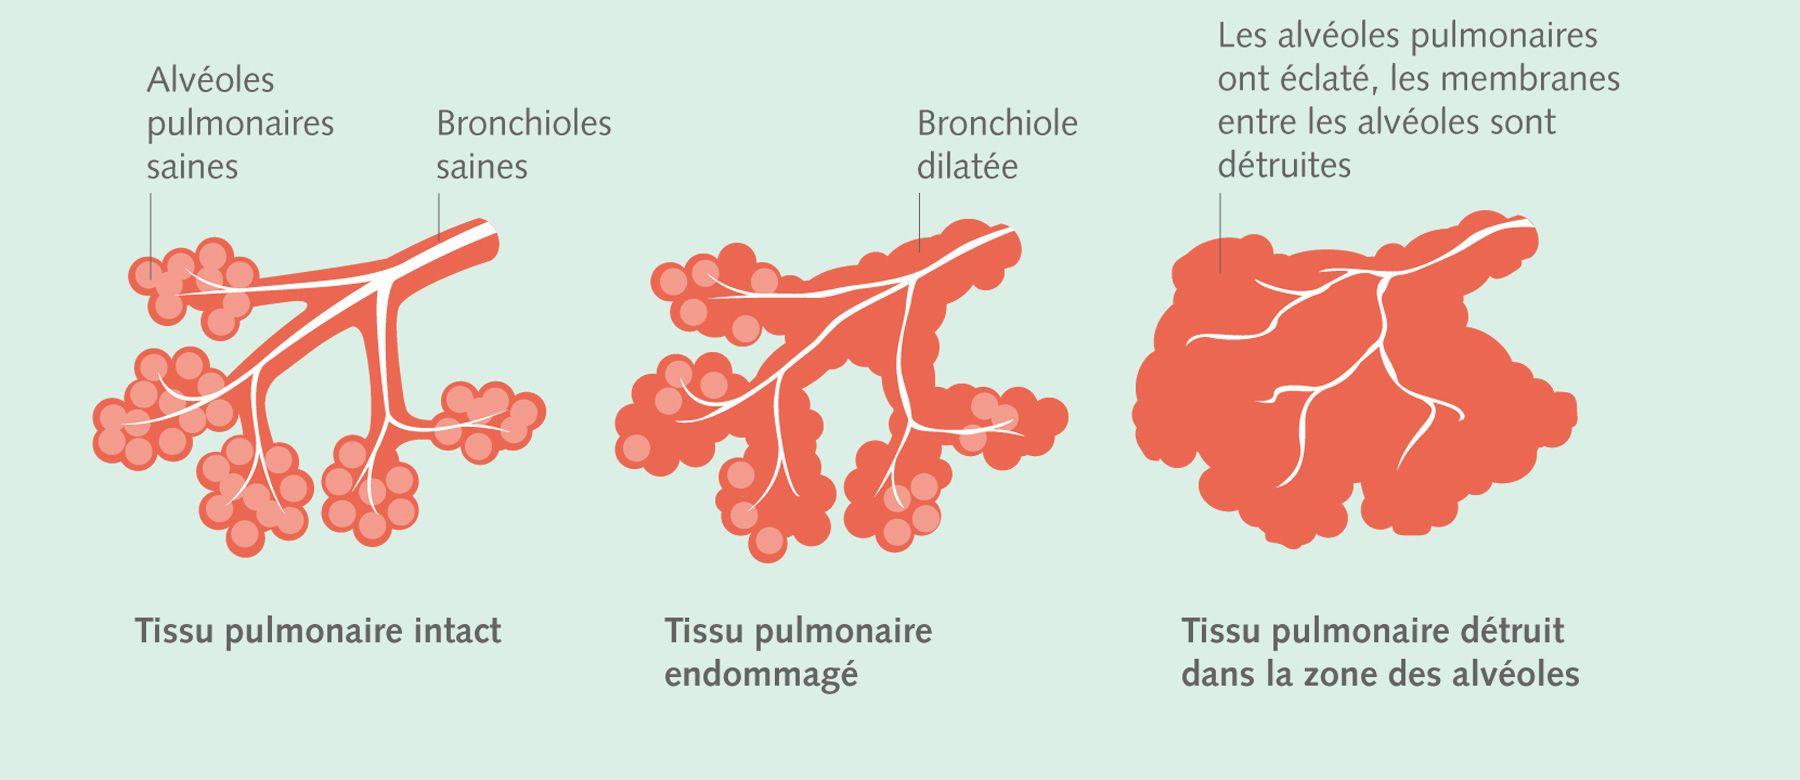 Alveoles endommagees